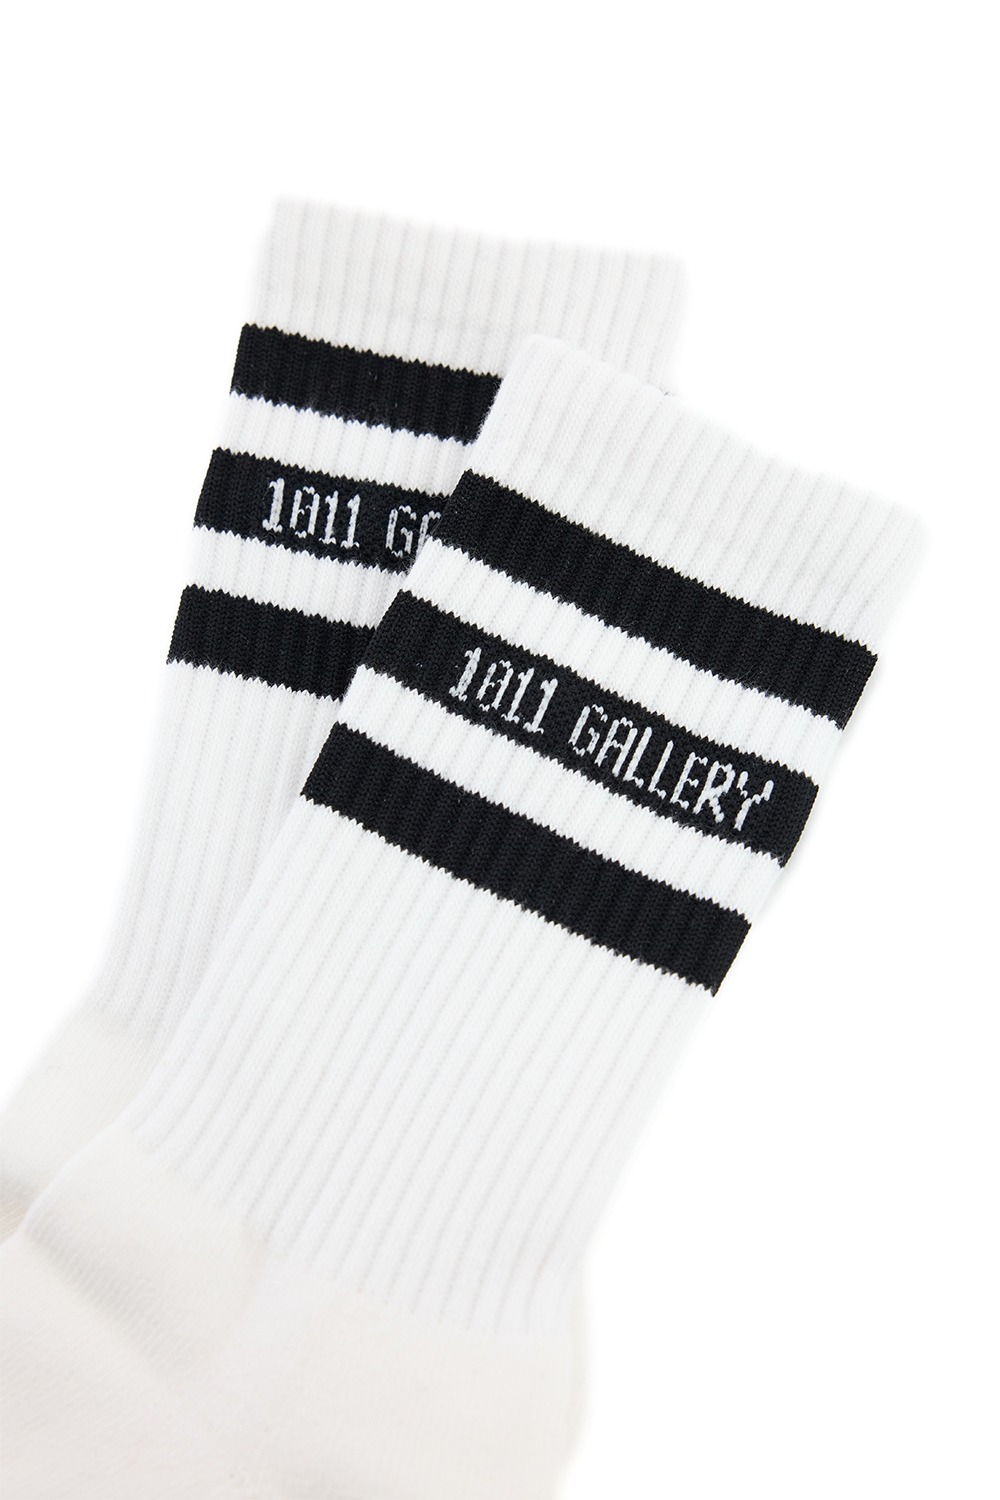 1011 Gallery Stripe Socks-Black